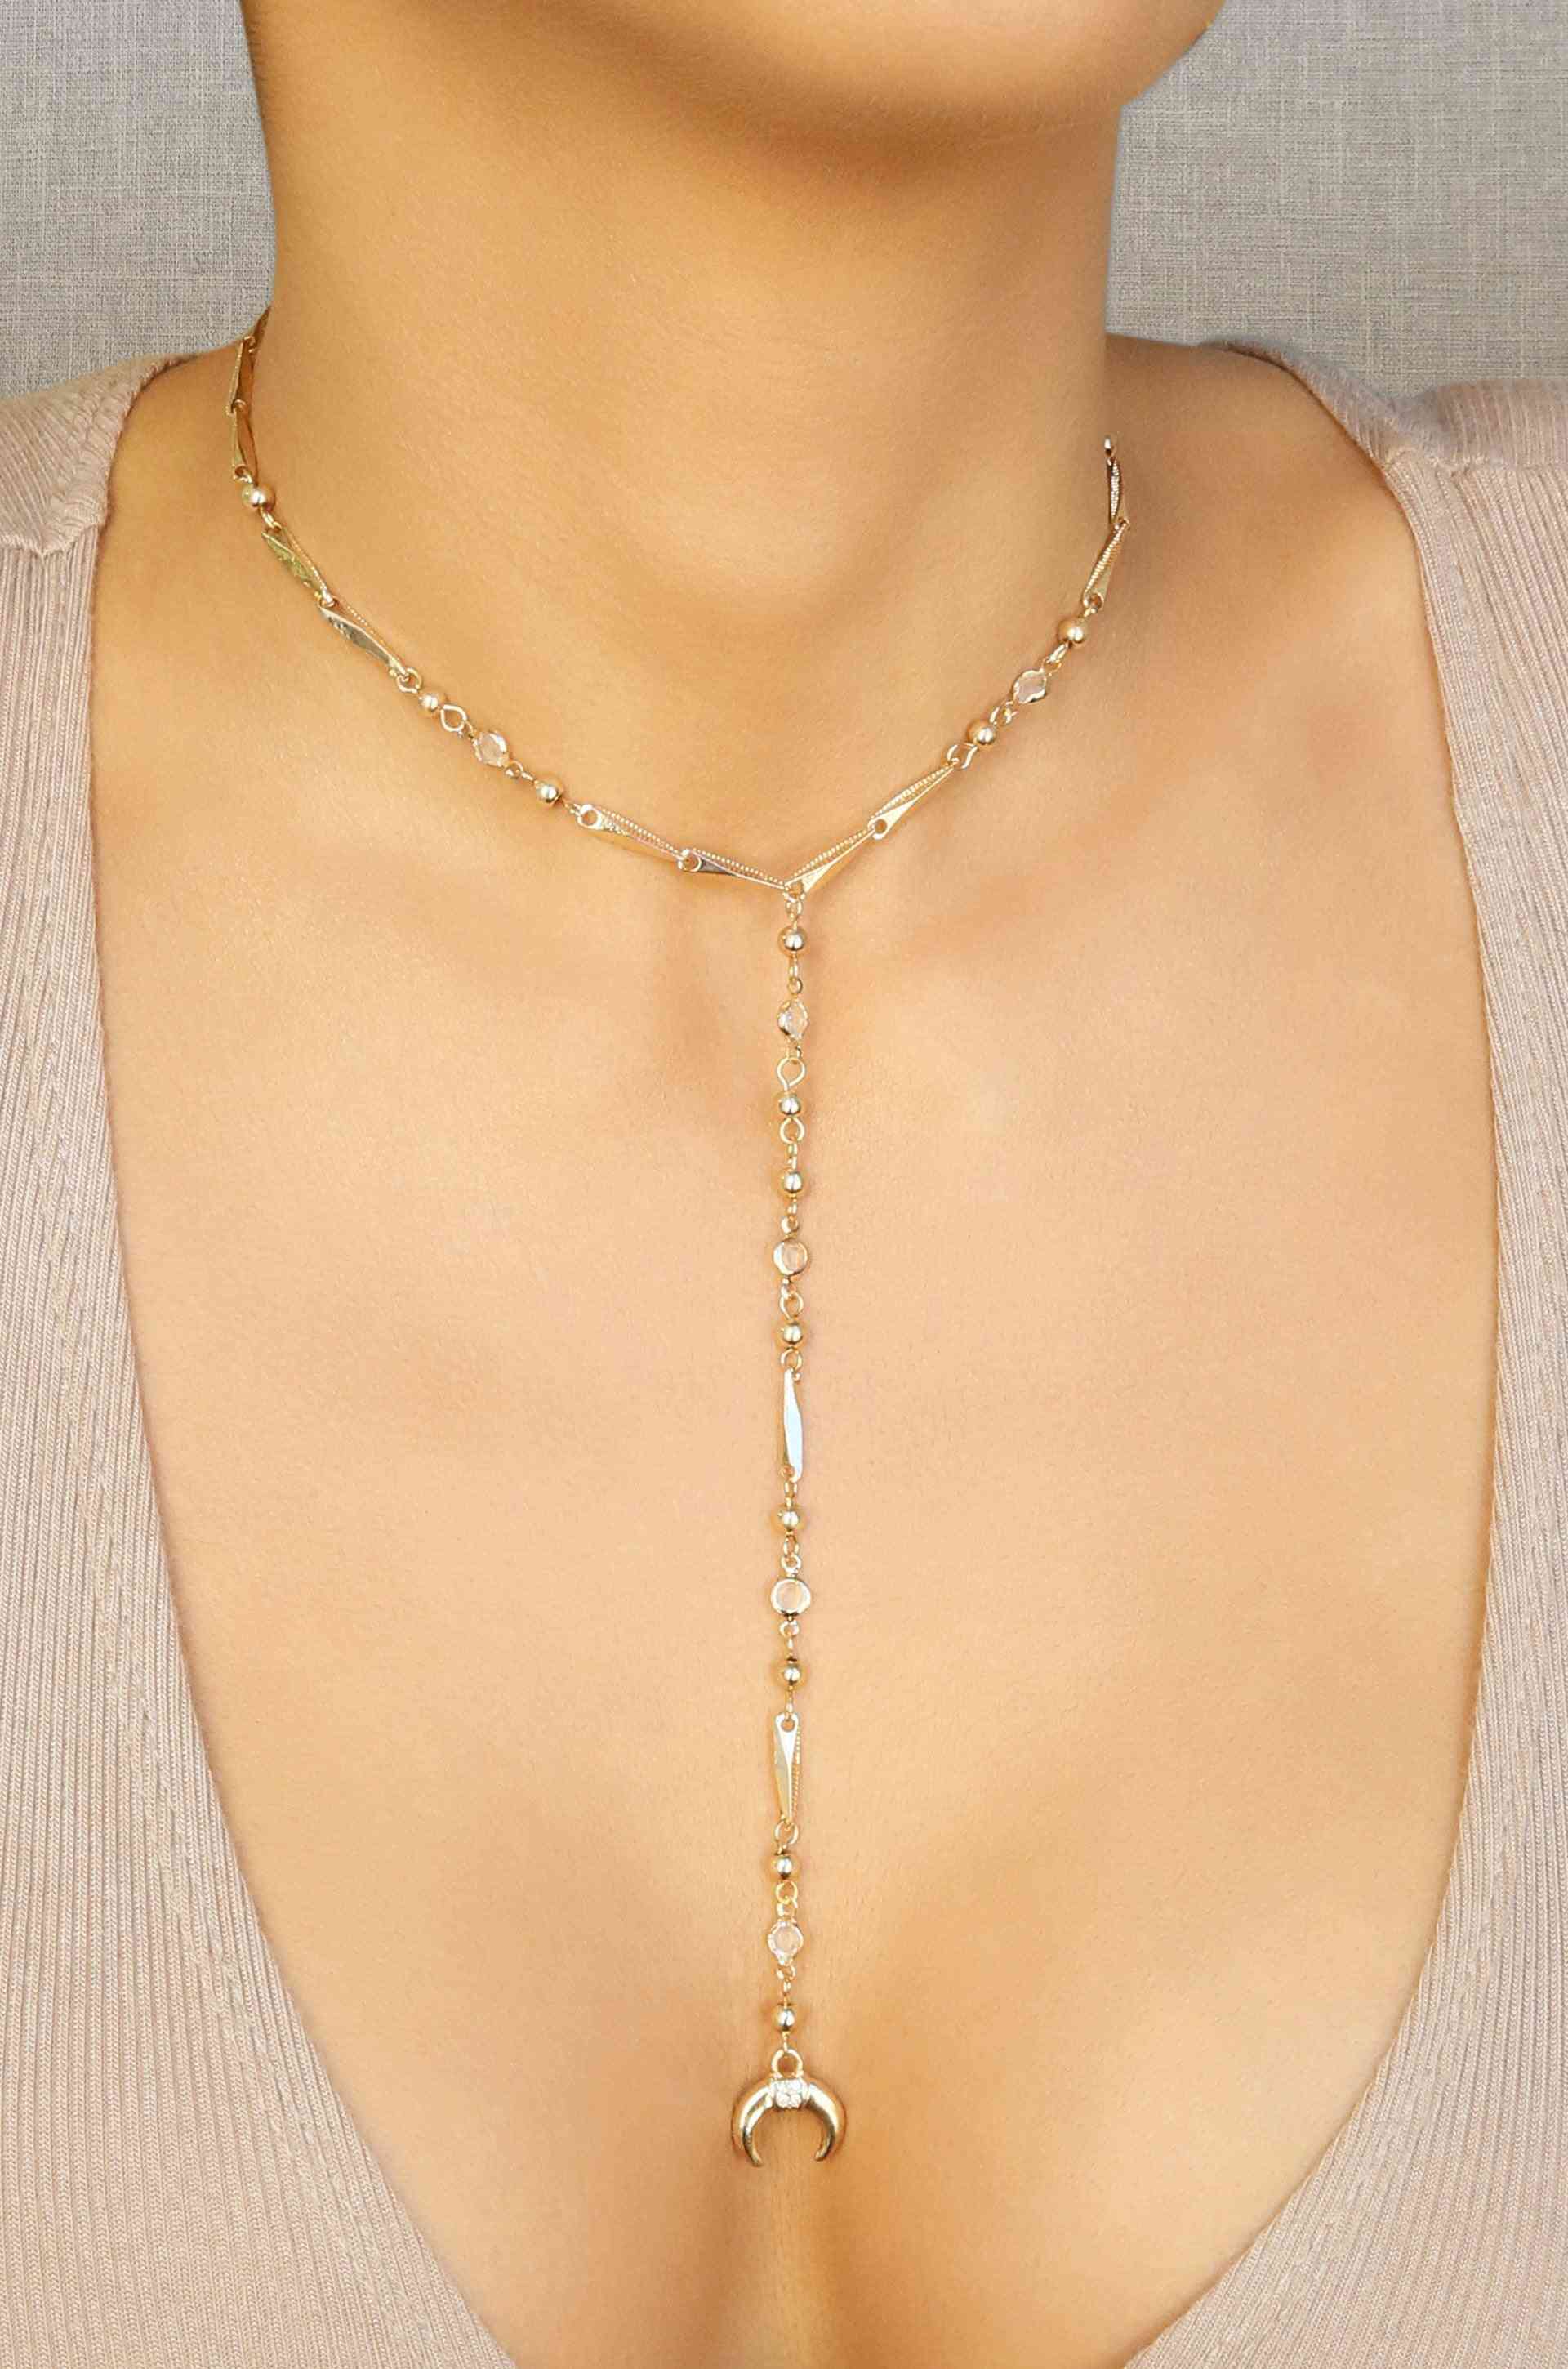 Fashionably Late Drop Choker Necklace